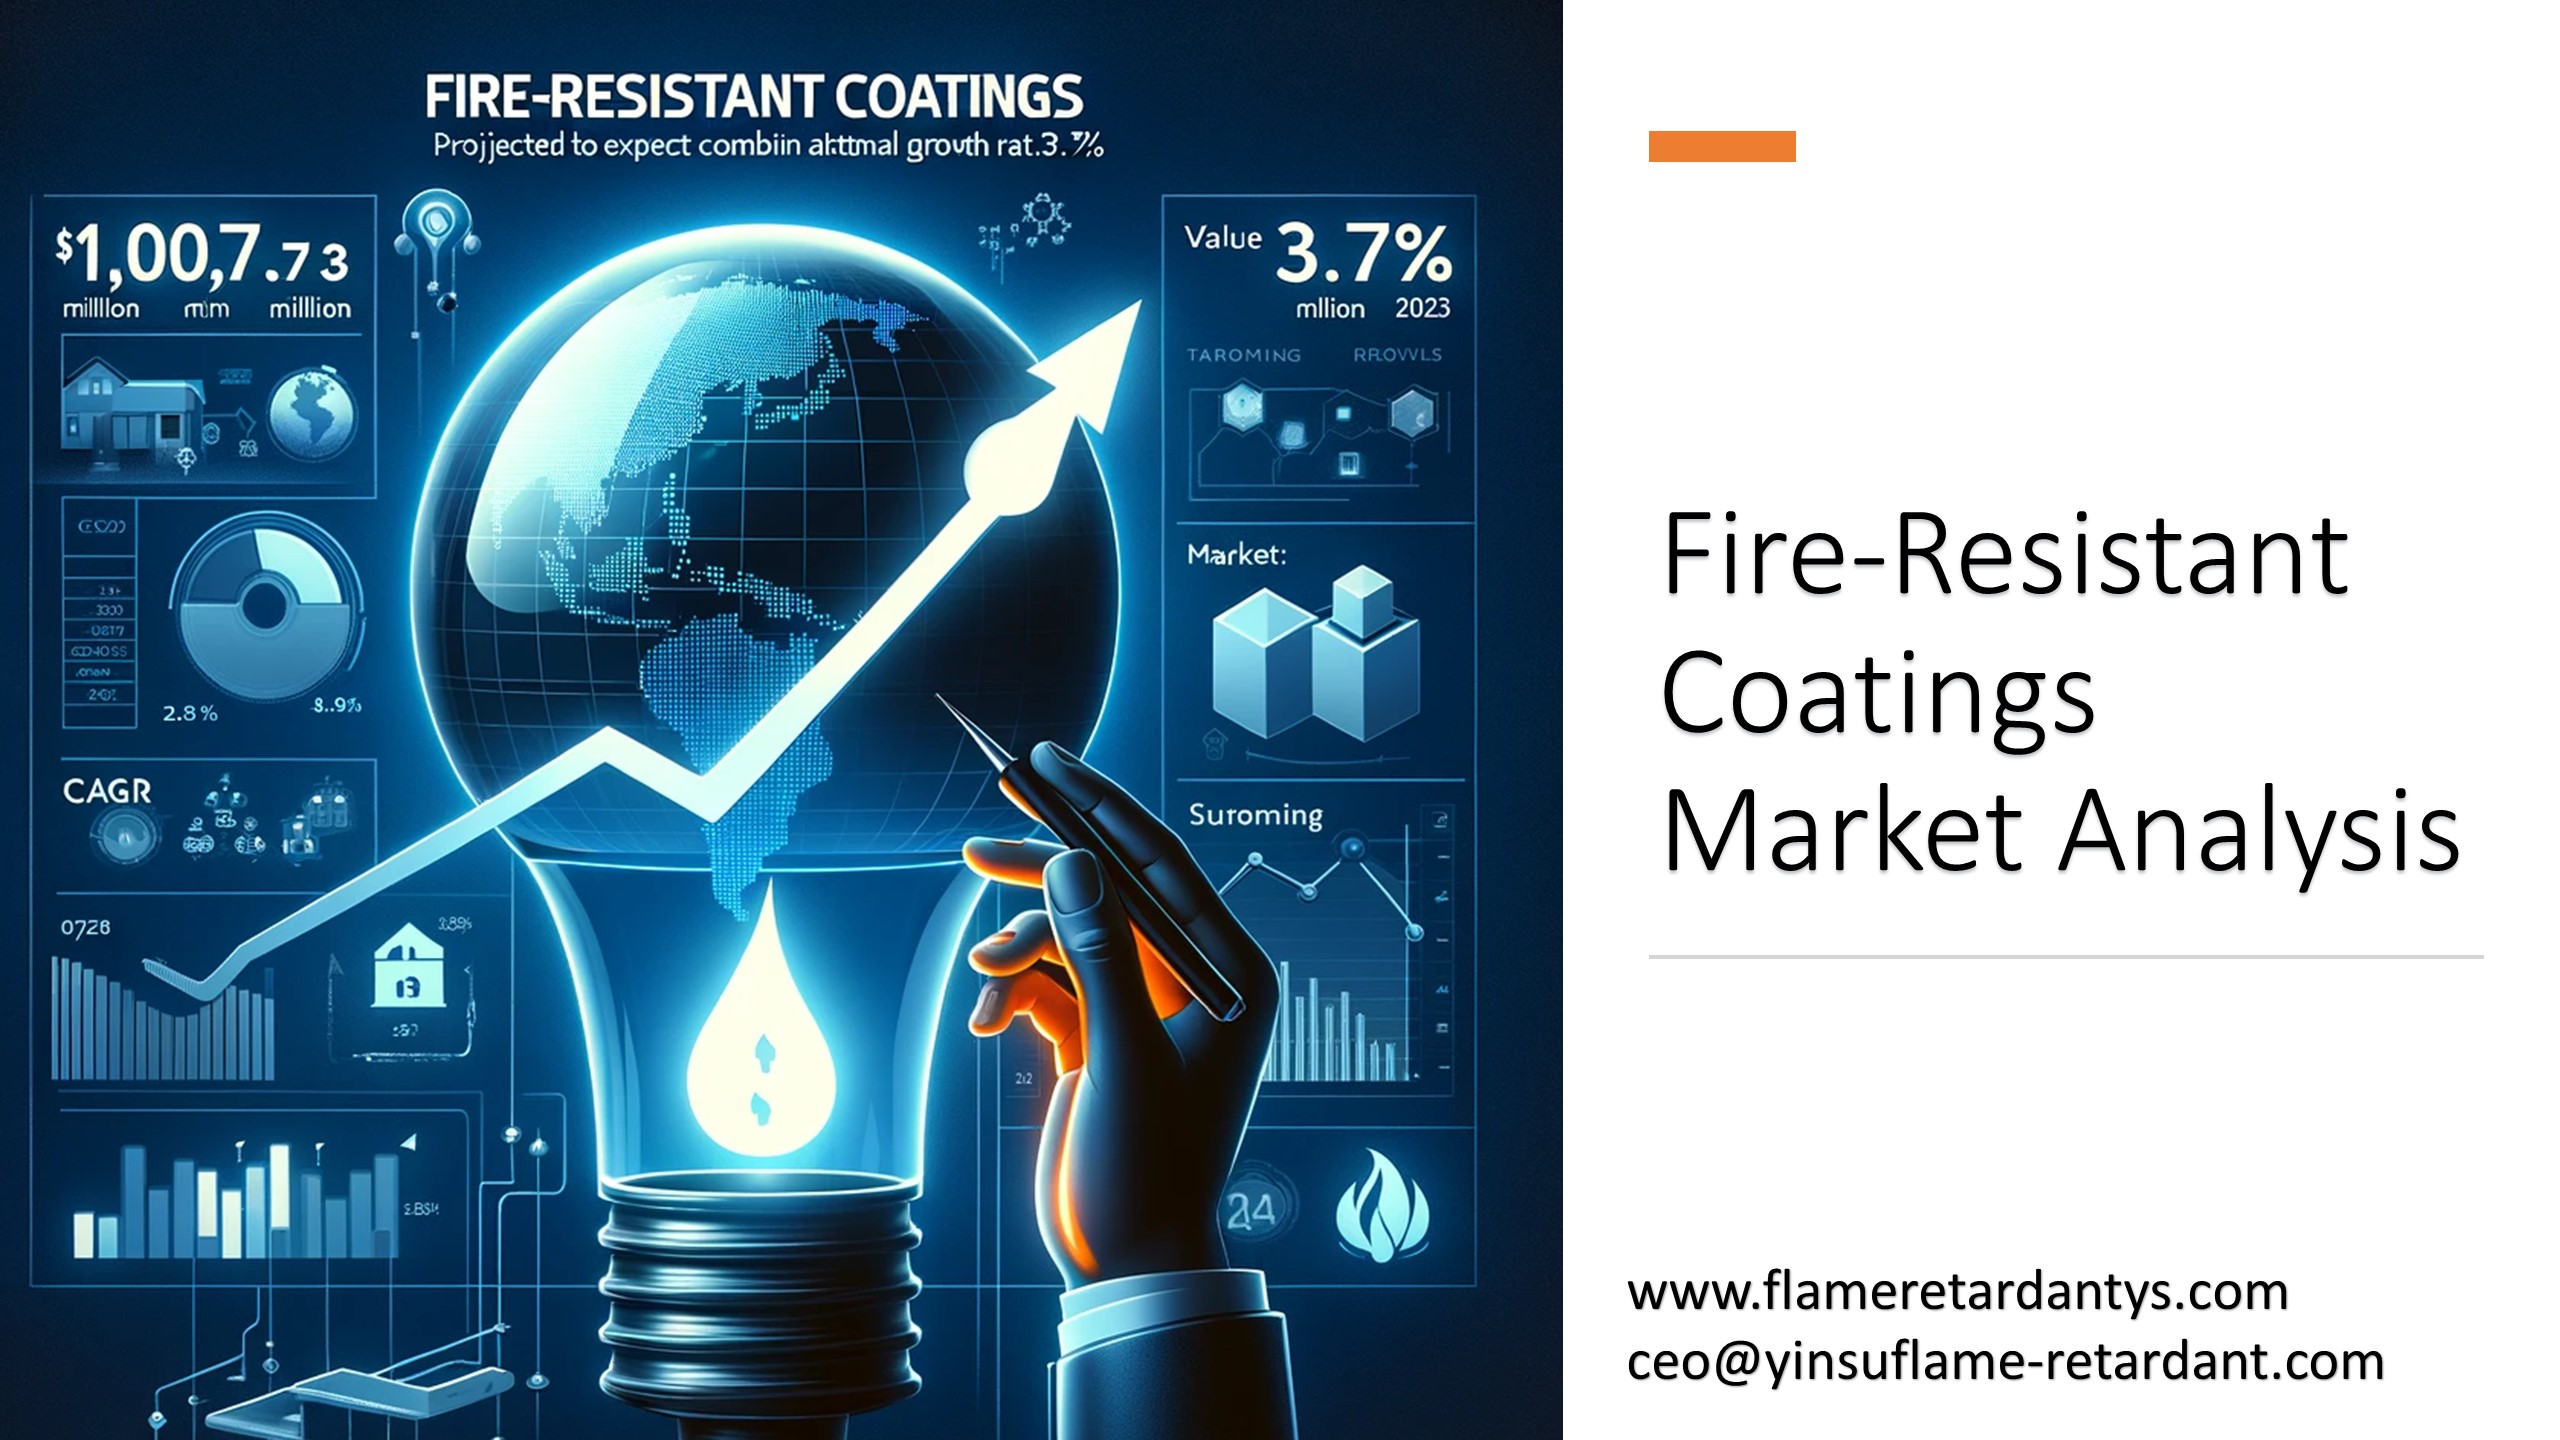 Fire-Resistant Coatings Market Analysis